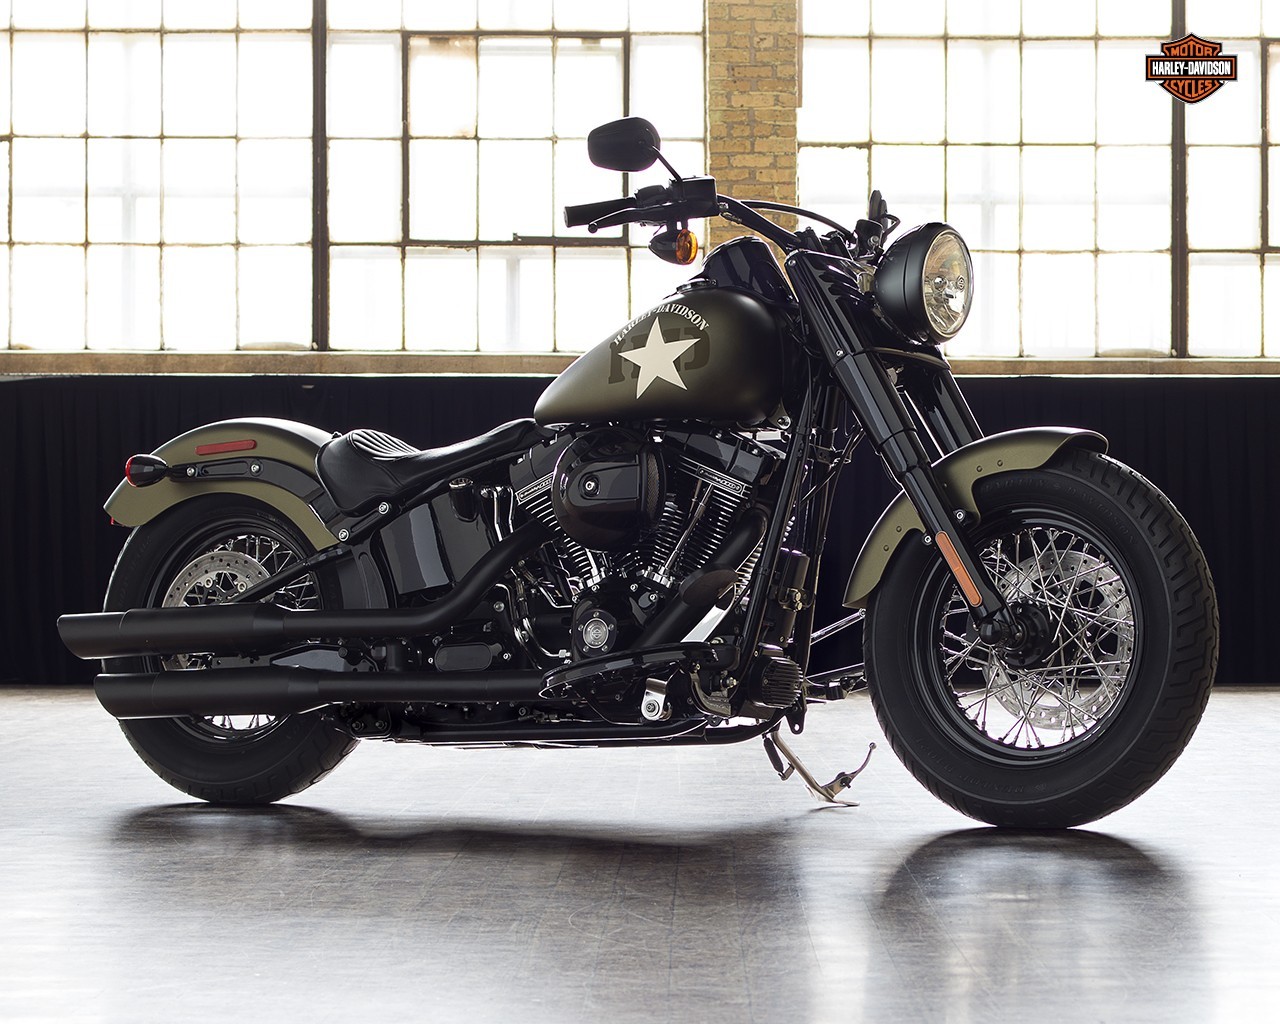 Harley Davidson Softail Slim S 2016 Military Edition For Sale Off 79 Medpharmres Com